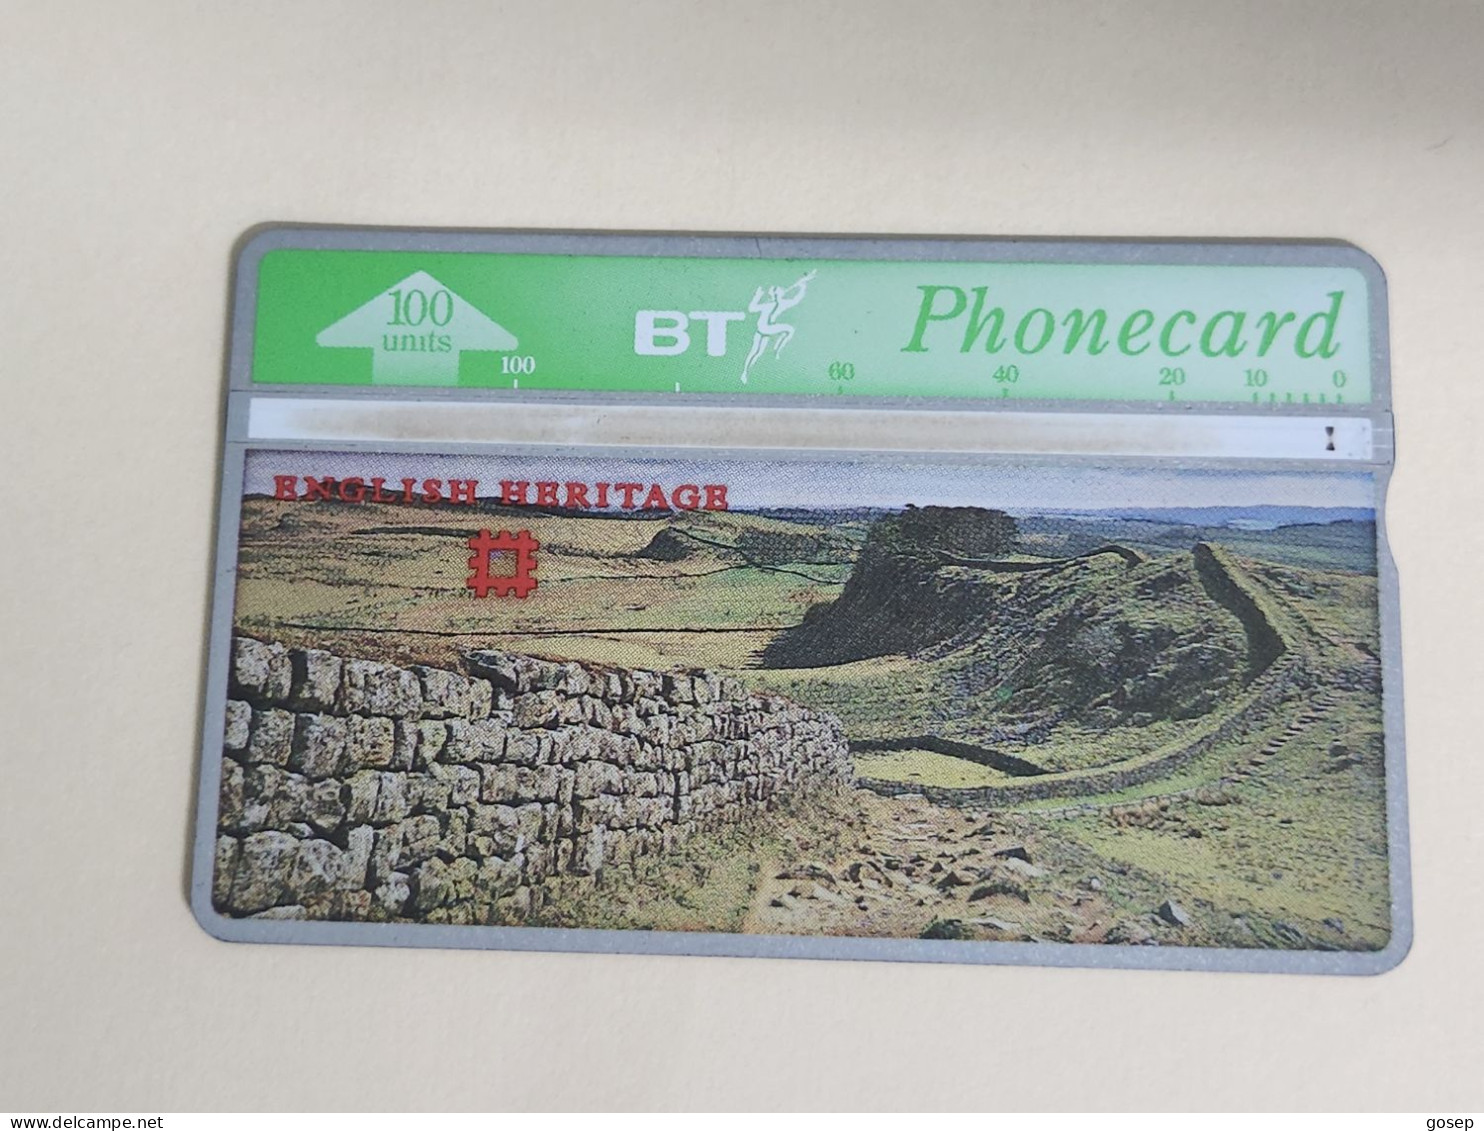 United Kingdom-(BTA117)-HERITAGE-Hadrian's Wall-(204)(100units)(527H20786)price Cataloge3.00£-used+1card Prepiad Free - BT Emissioni Pubblicitarie